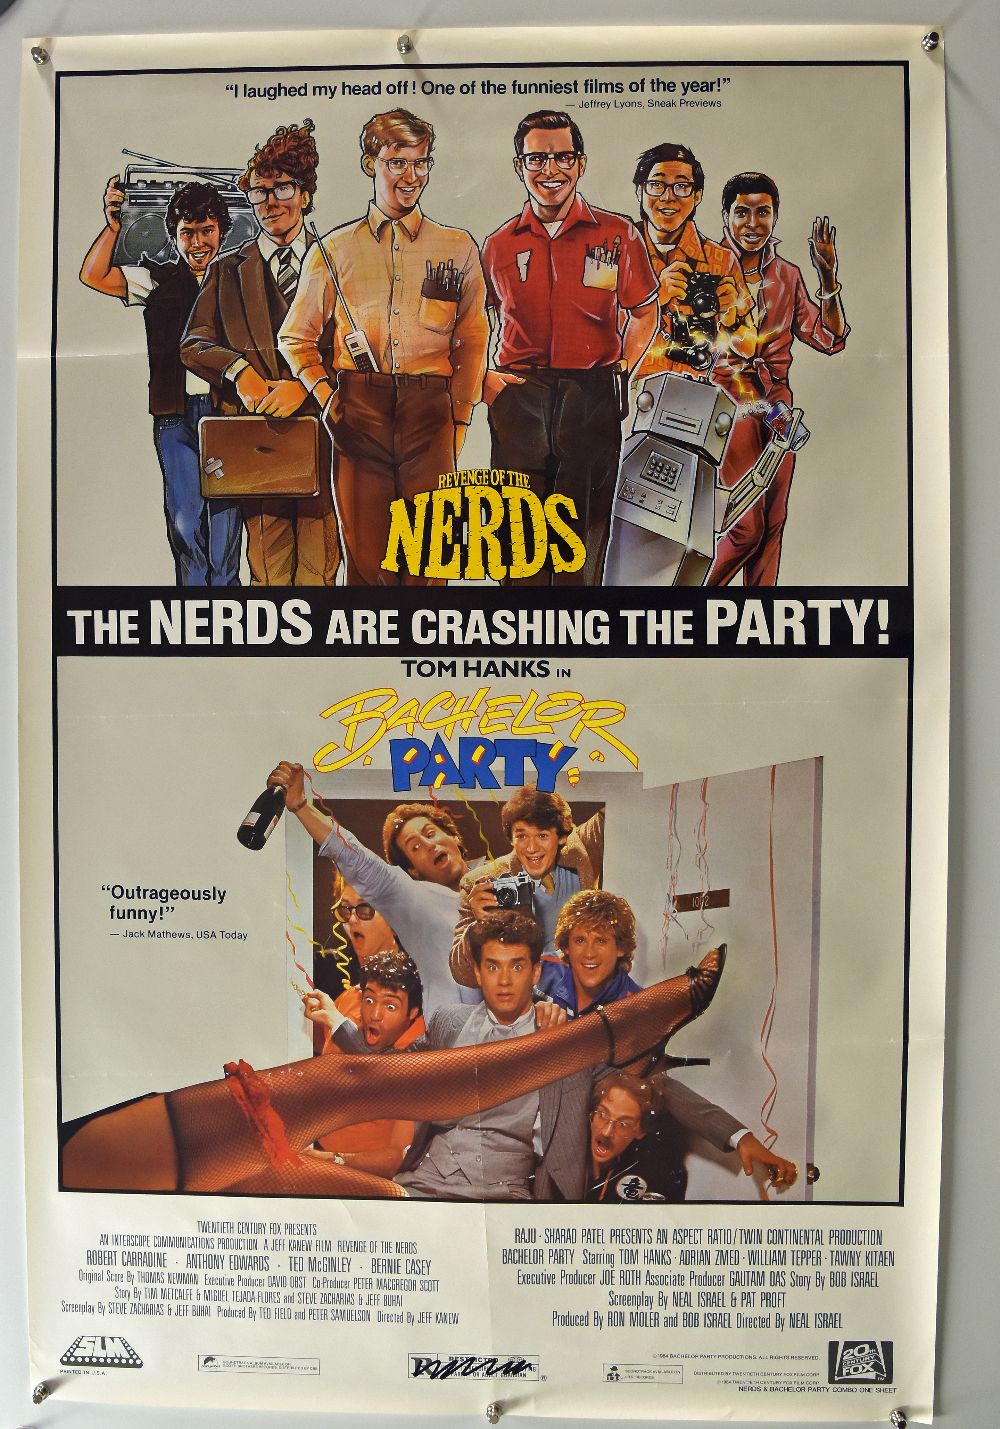 Original Movie/Film Poster Revenge of the Nerds / Batchelor Party - 27 X 40 Double film bill